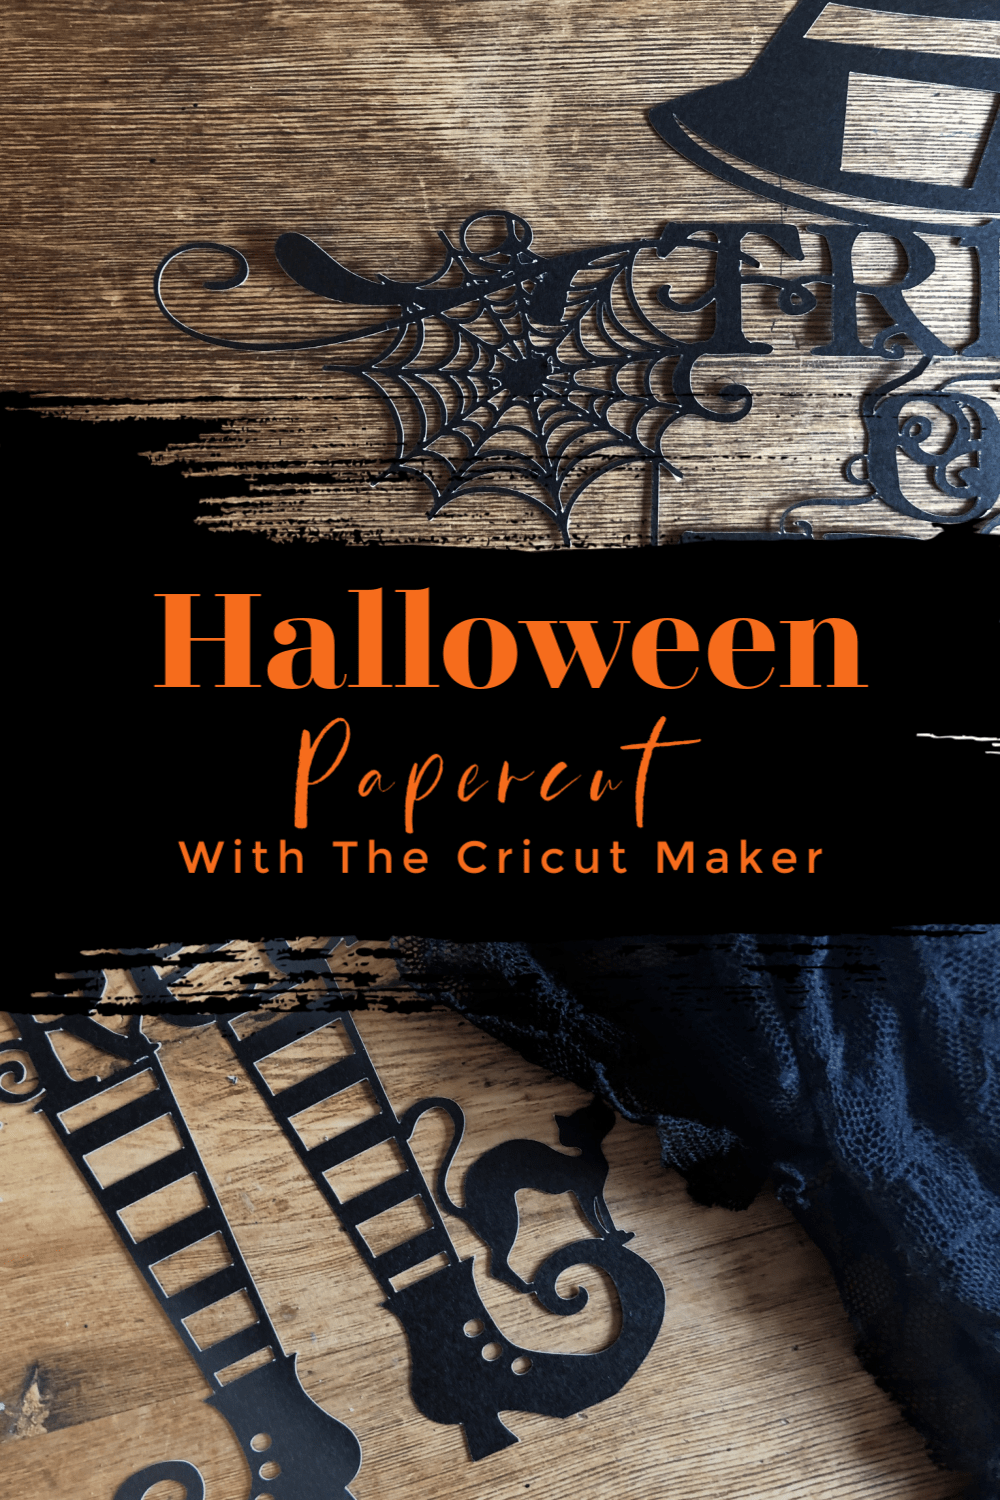 Halloween Papercut With The Cricut Maker